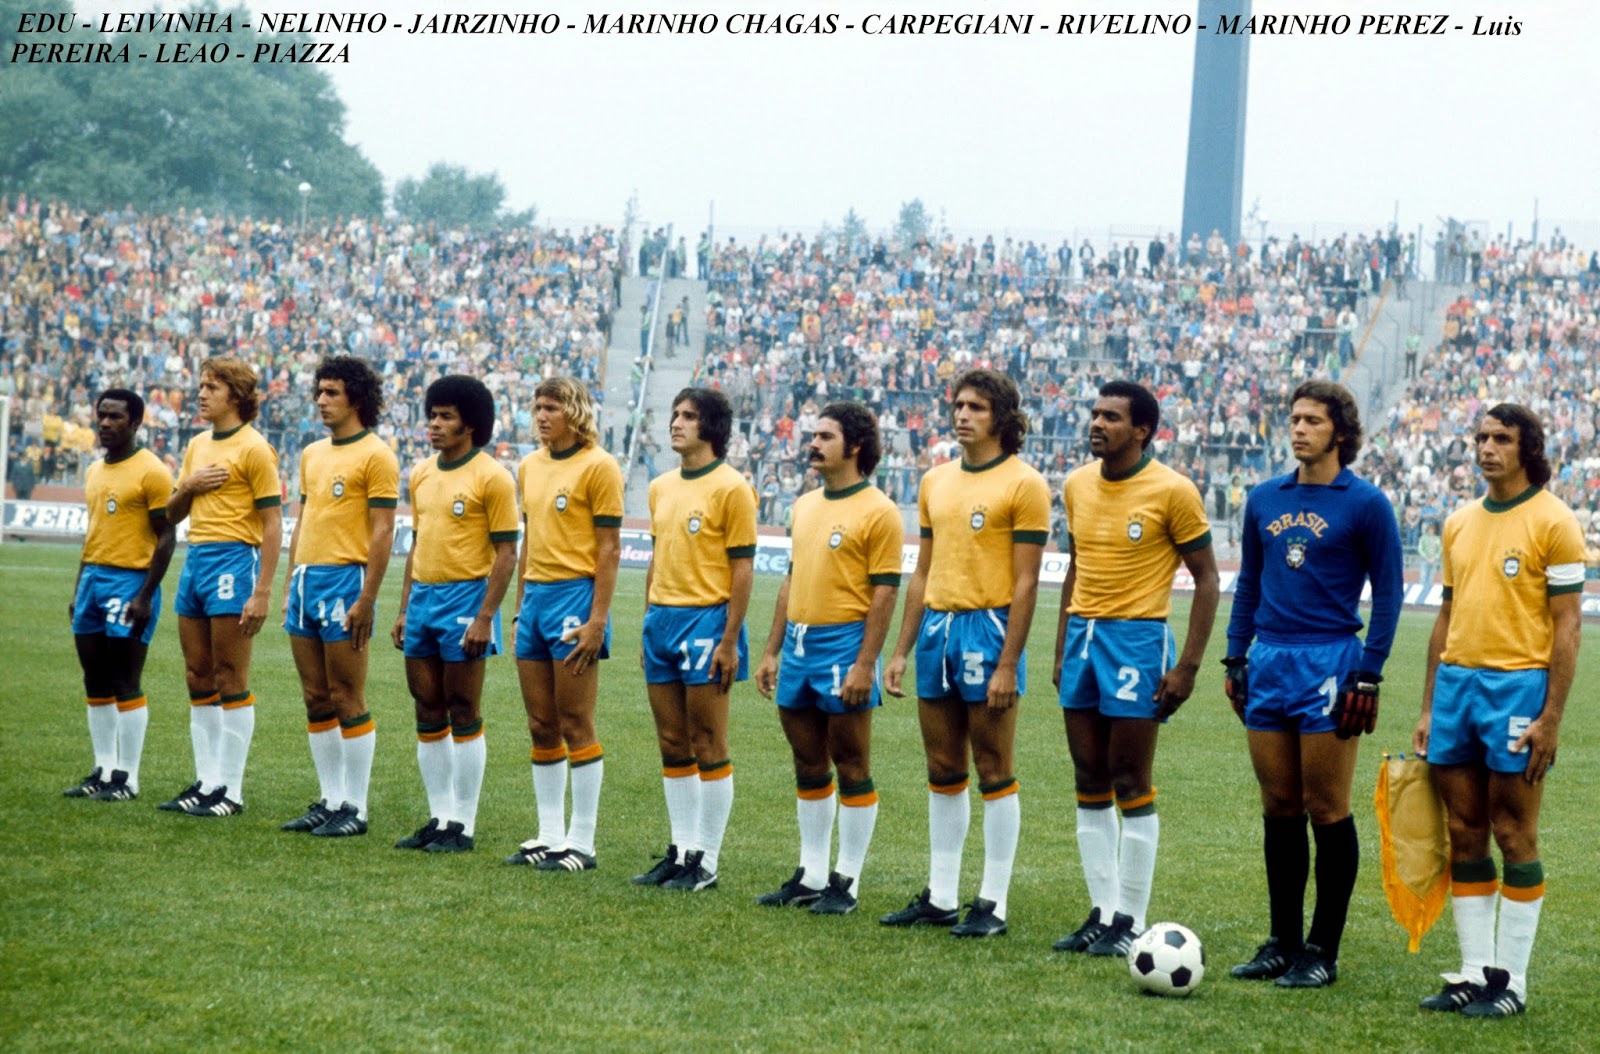 Soccer Nostalgia: Old team Photographs-Part 24f